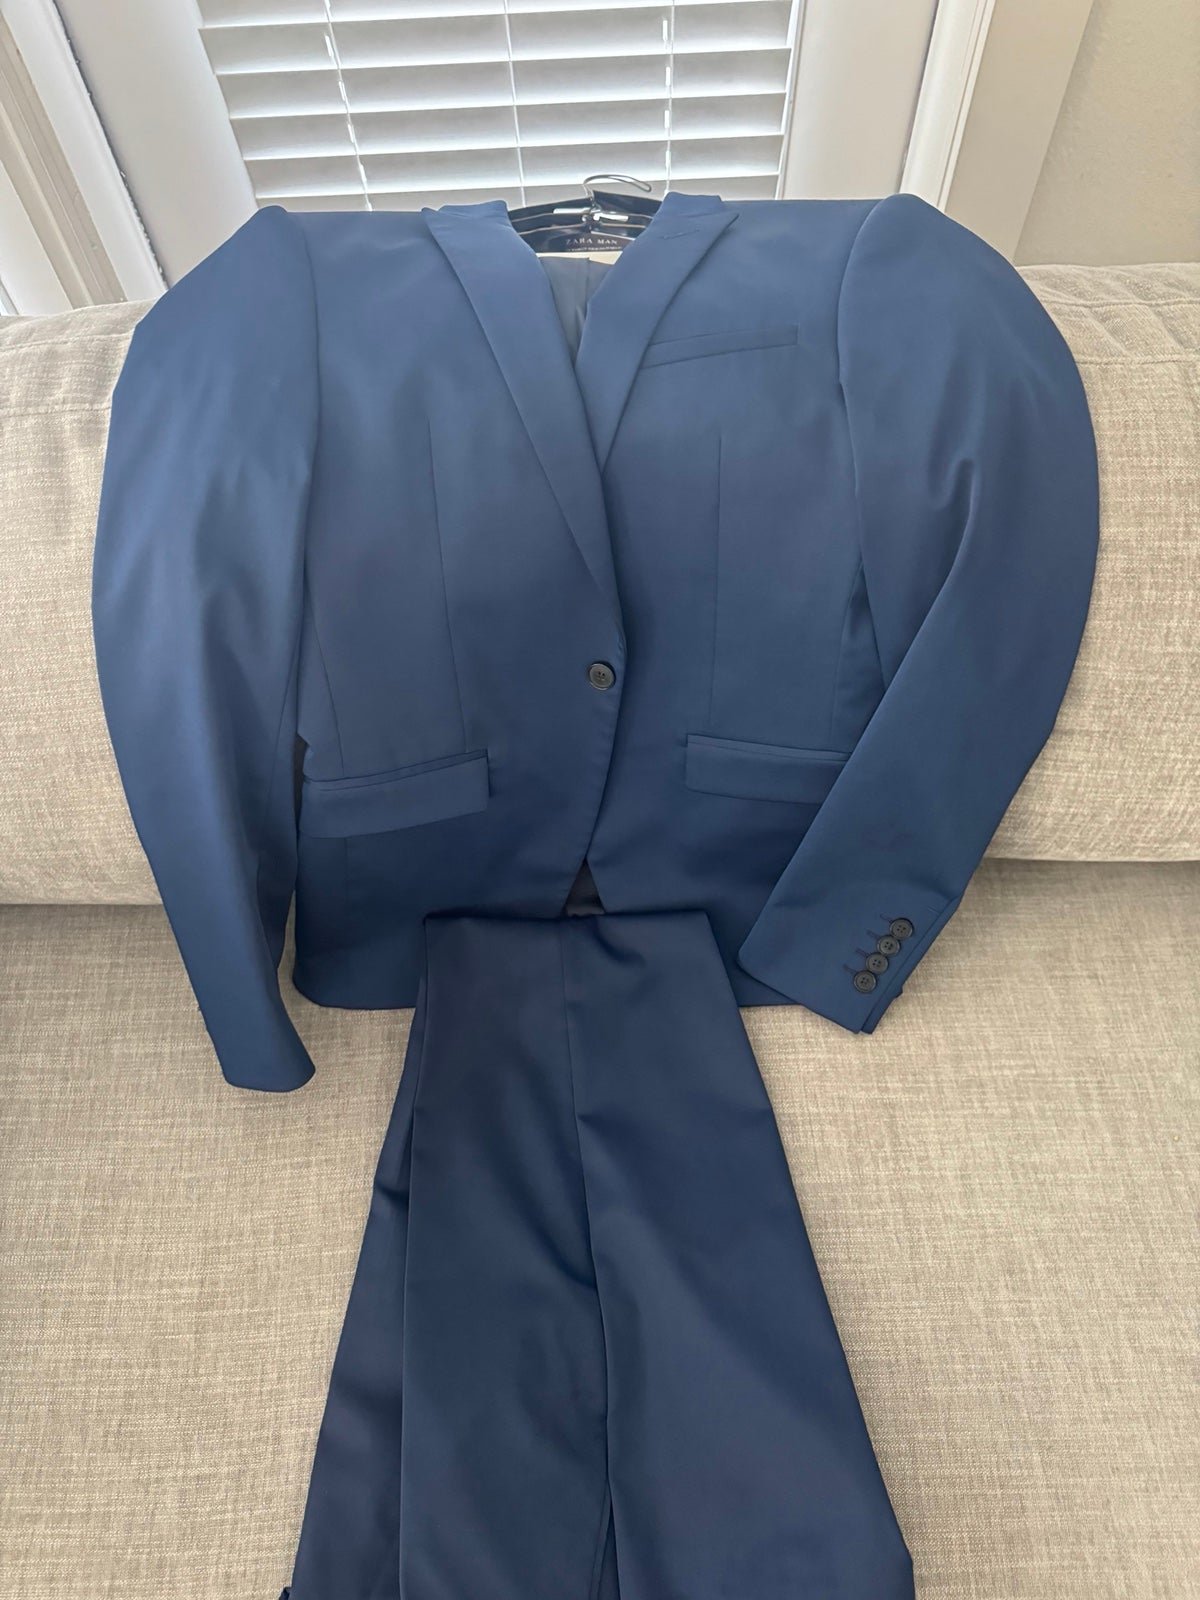 Zara Men’s Suit Jacket and Pants Navy Blue IWEcGfKI4